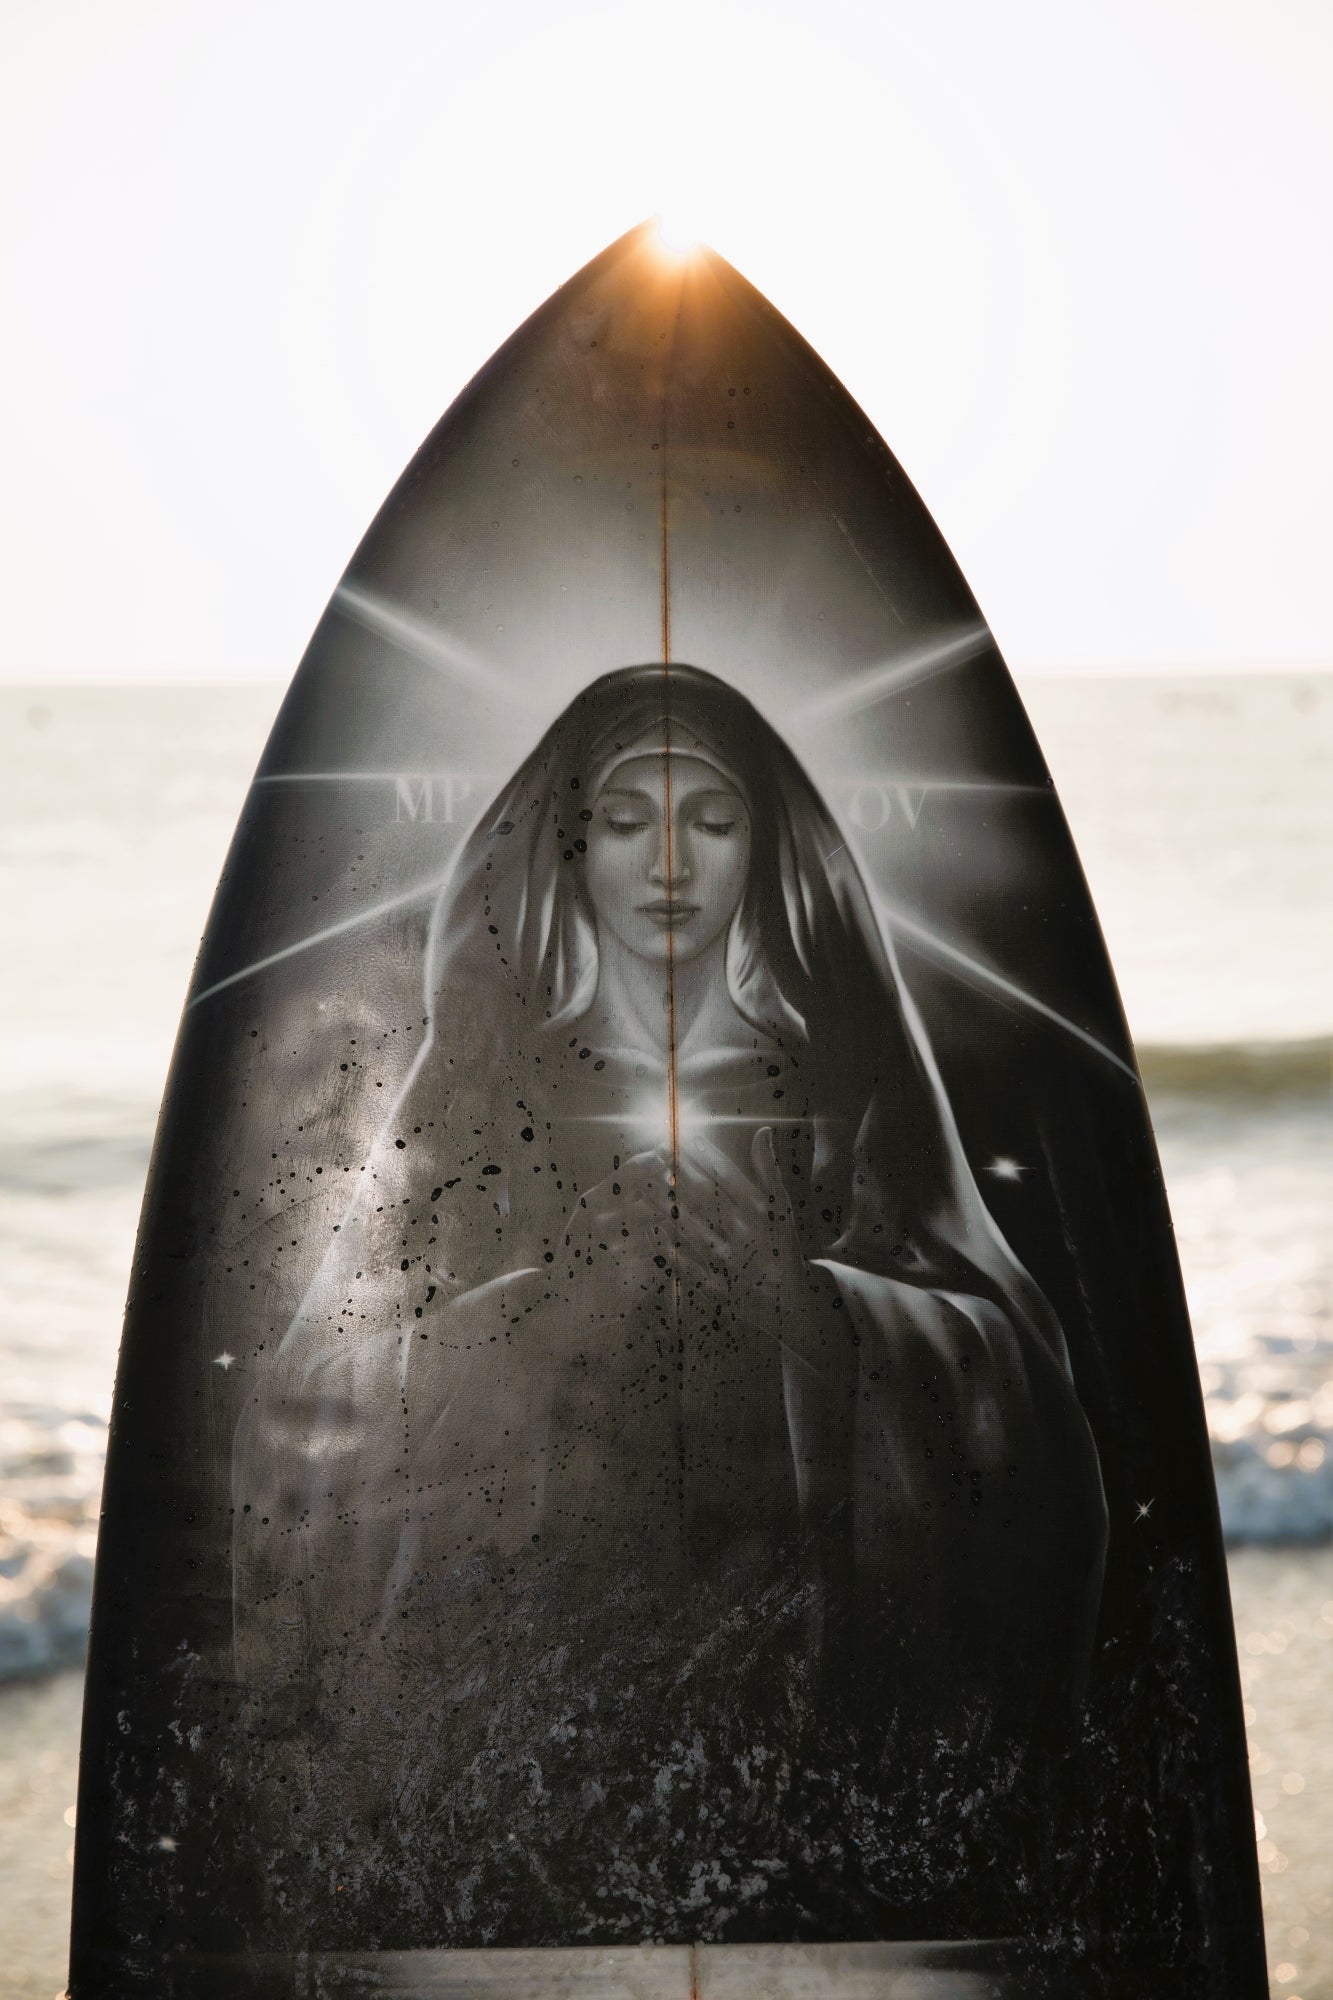 The Stella Maris Surfboard - Hybrid Model*